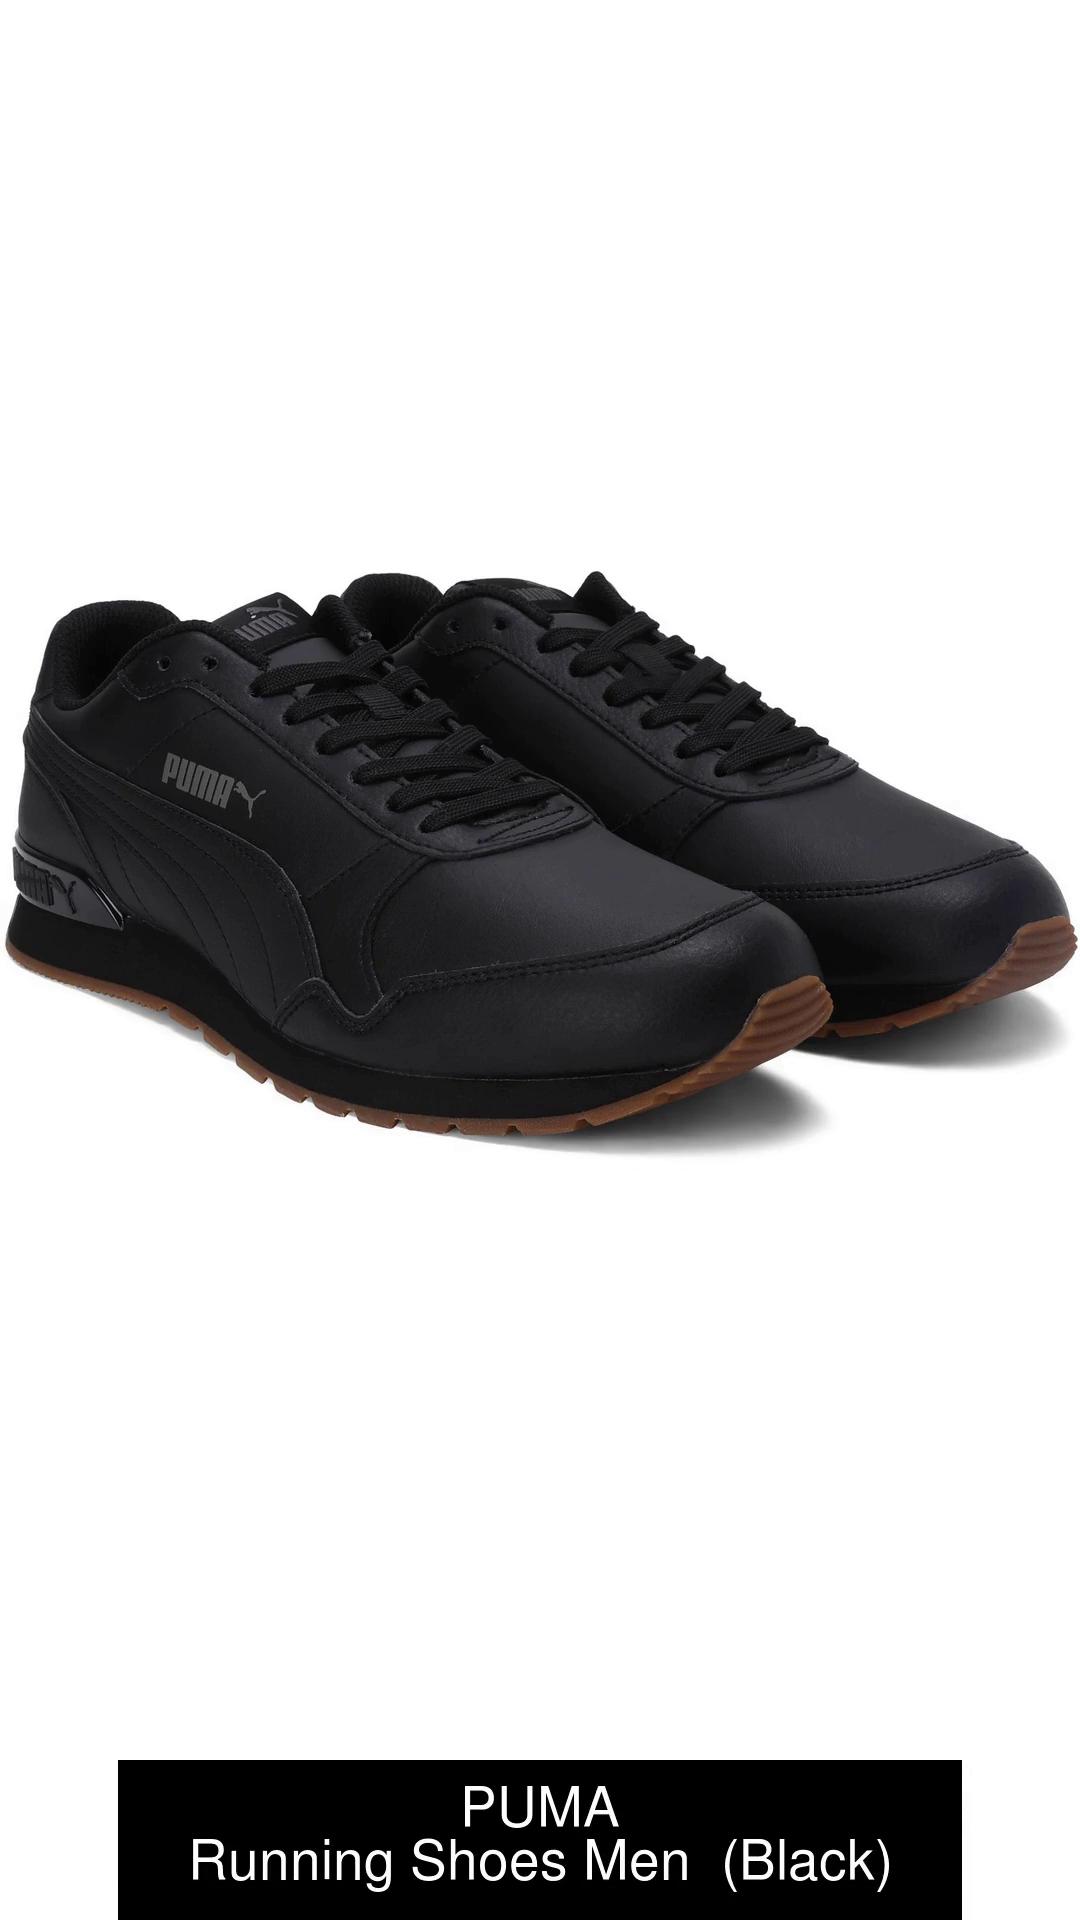 PUMA Runner v2 Full L Running For Men - Buy PUMA ST Runner v2 Full L Running Shoes For Men Online at Best Price - Shop Online Footwears in